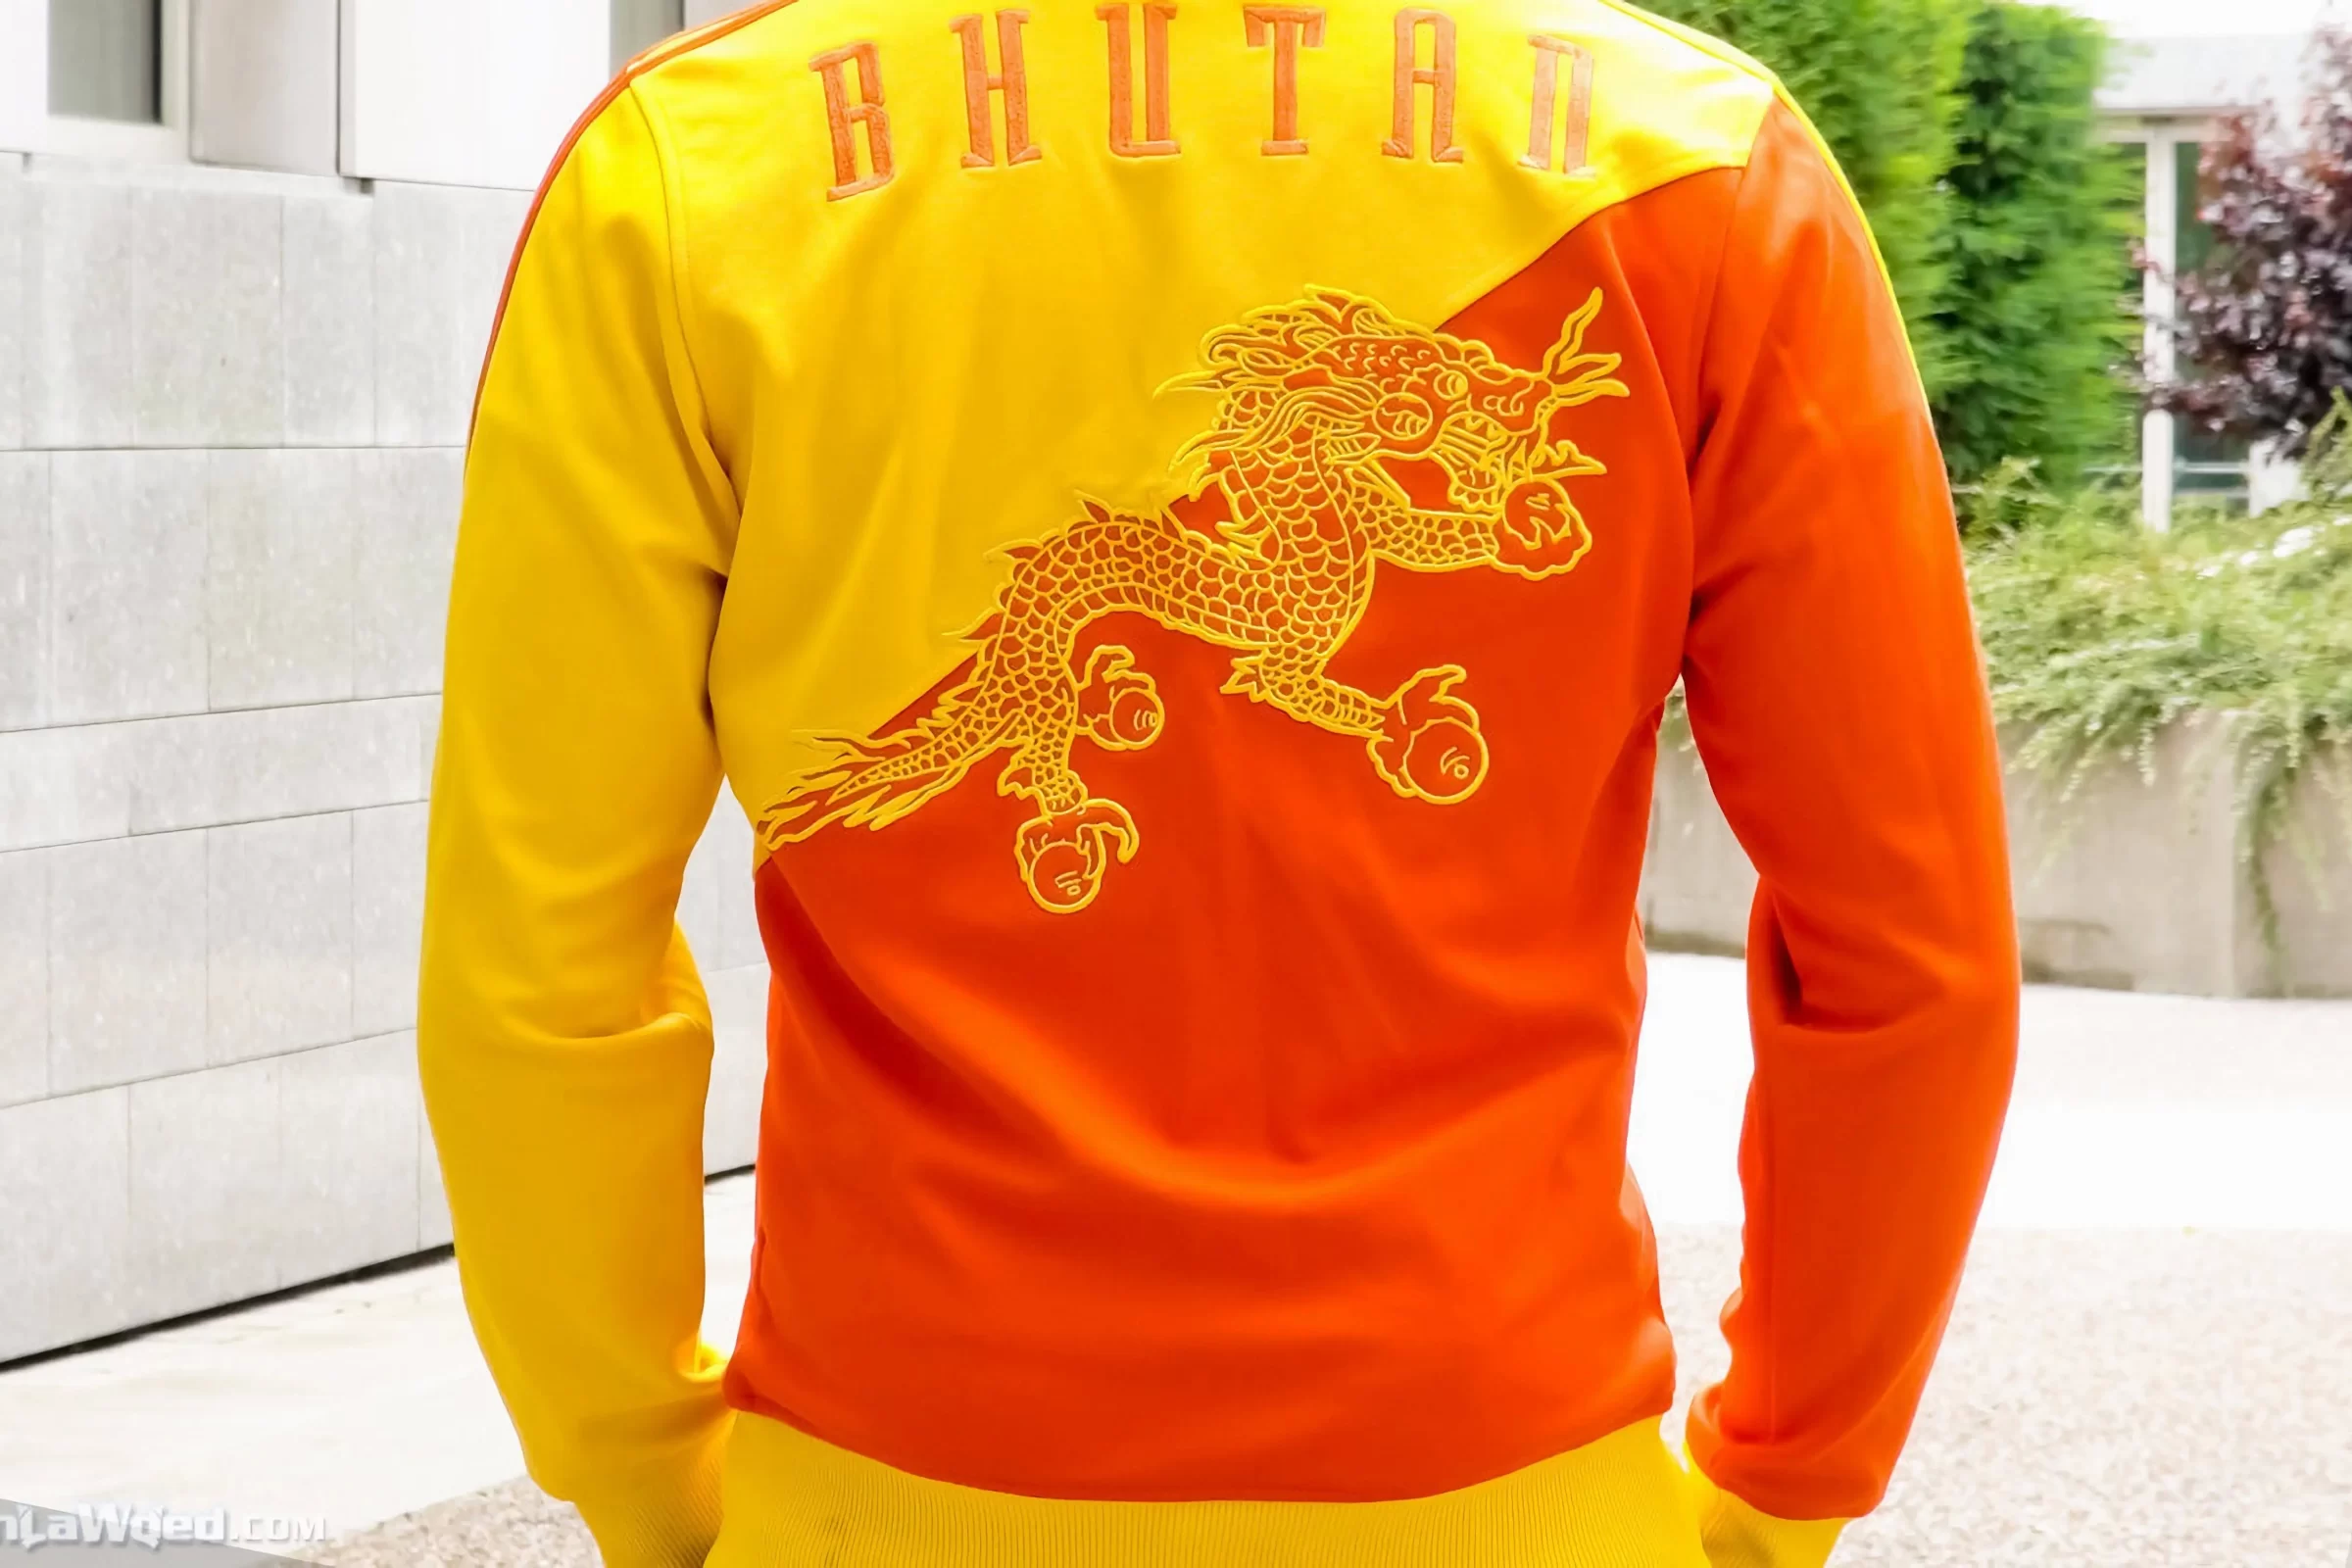 Men’s 2007 Bhutan Track Top by Adidas Originals: Arrogant (EnLawded.com file #lmchk90642ip2y123255kg9st)